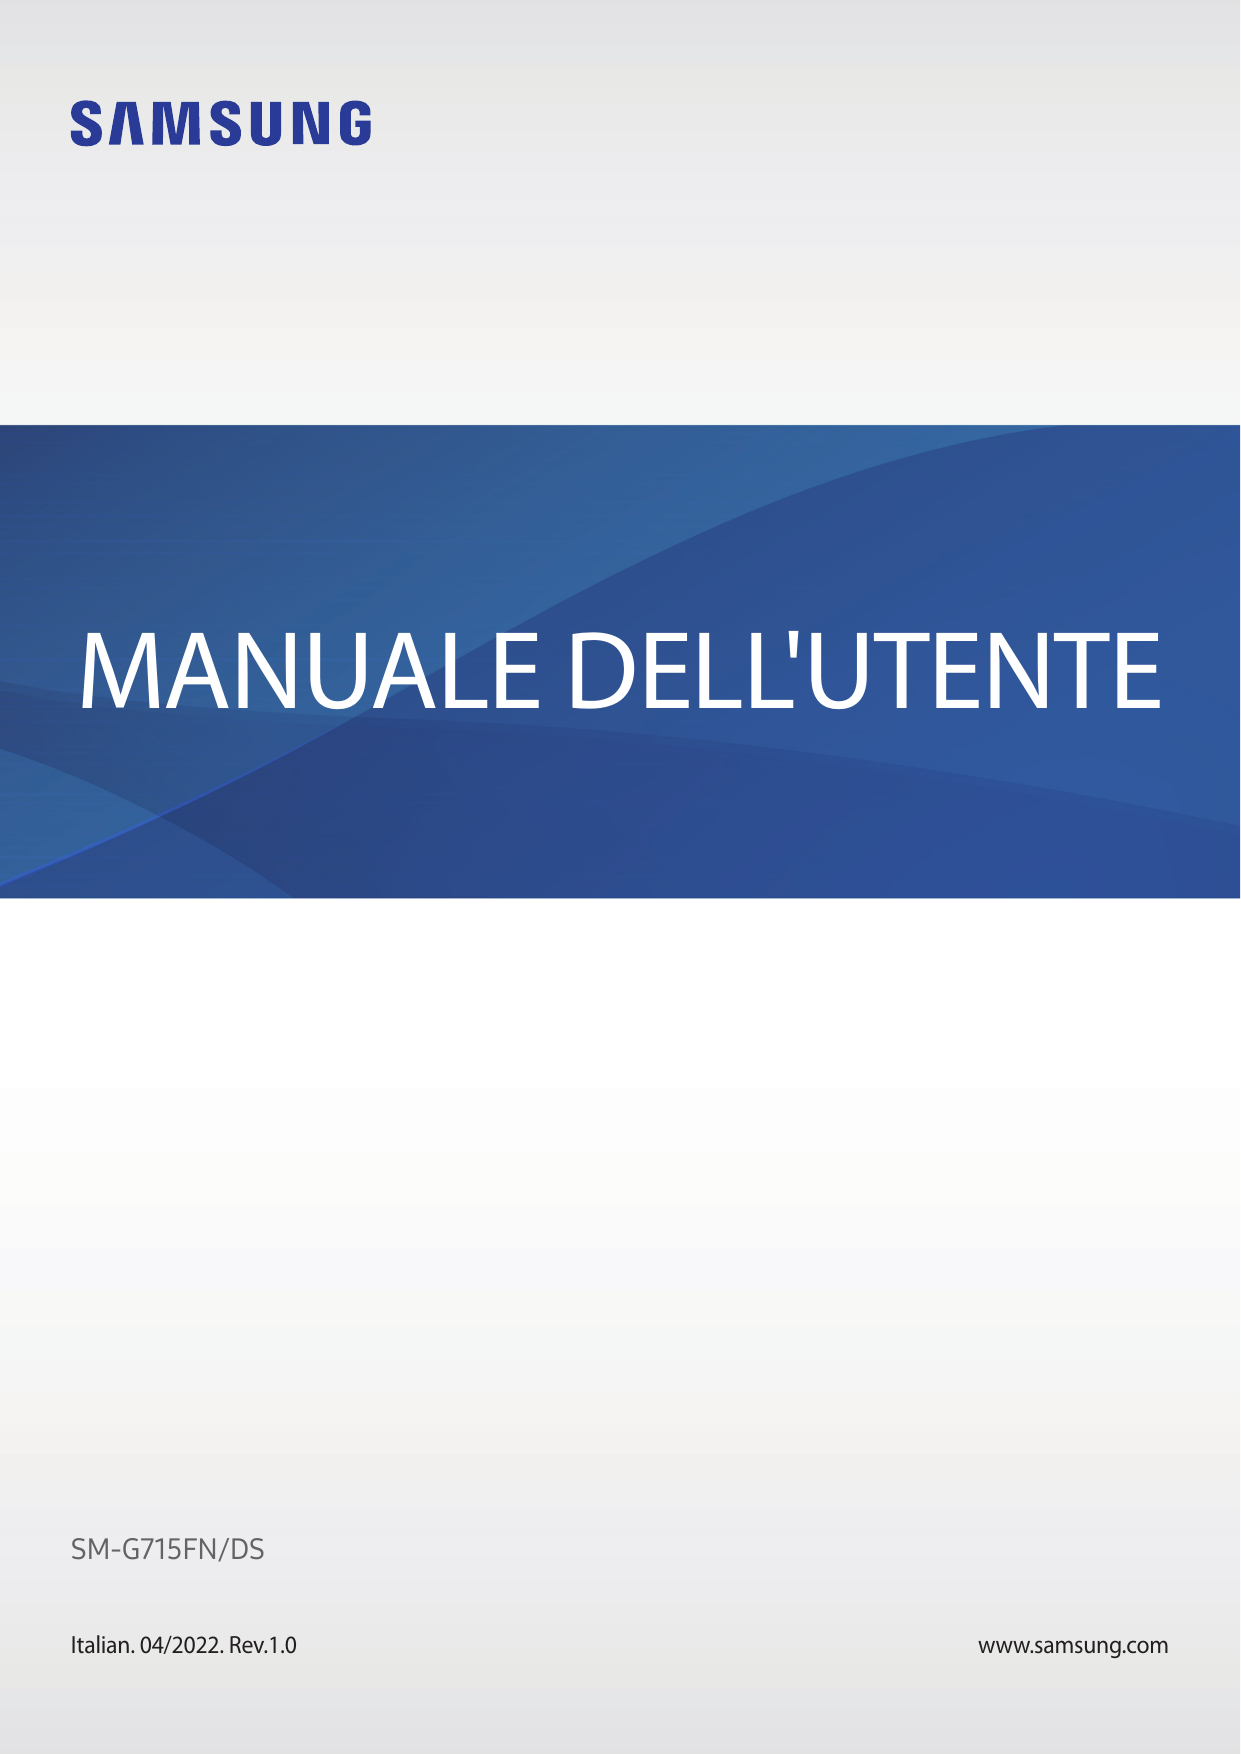 MANUALE DELL'UTENTESM-G715FN/DSItalian. 04/2022. Rev.1.0www.samsung.com